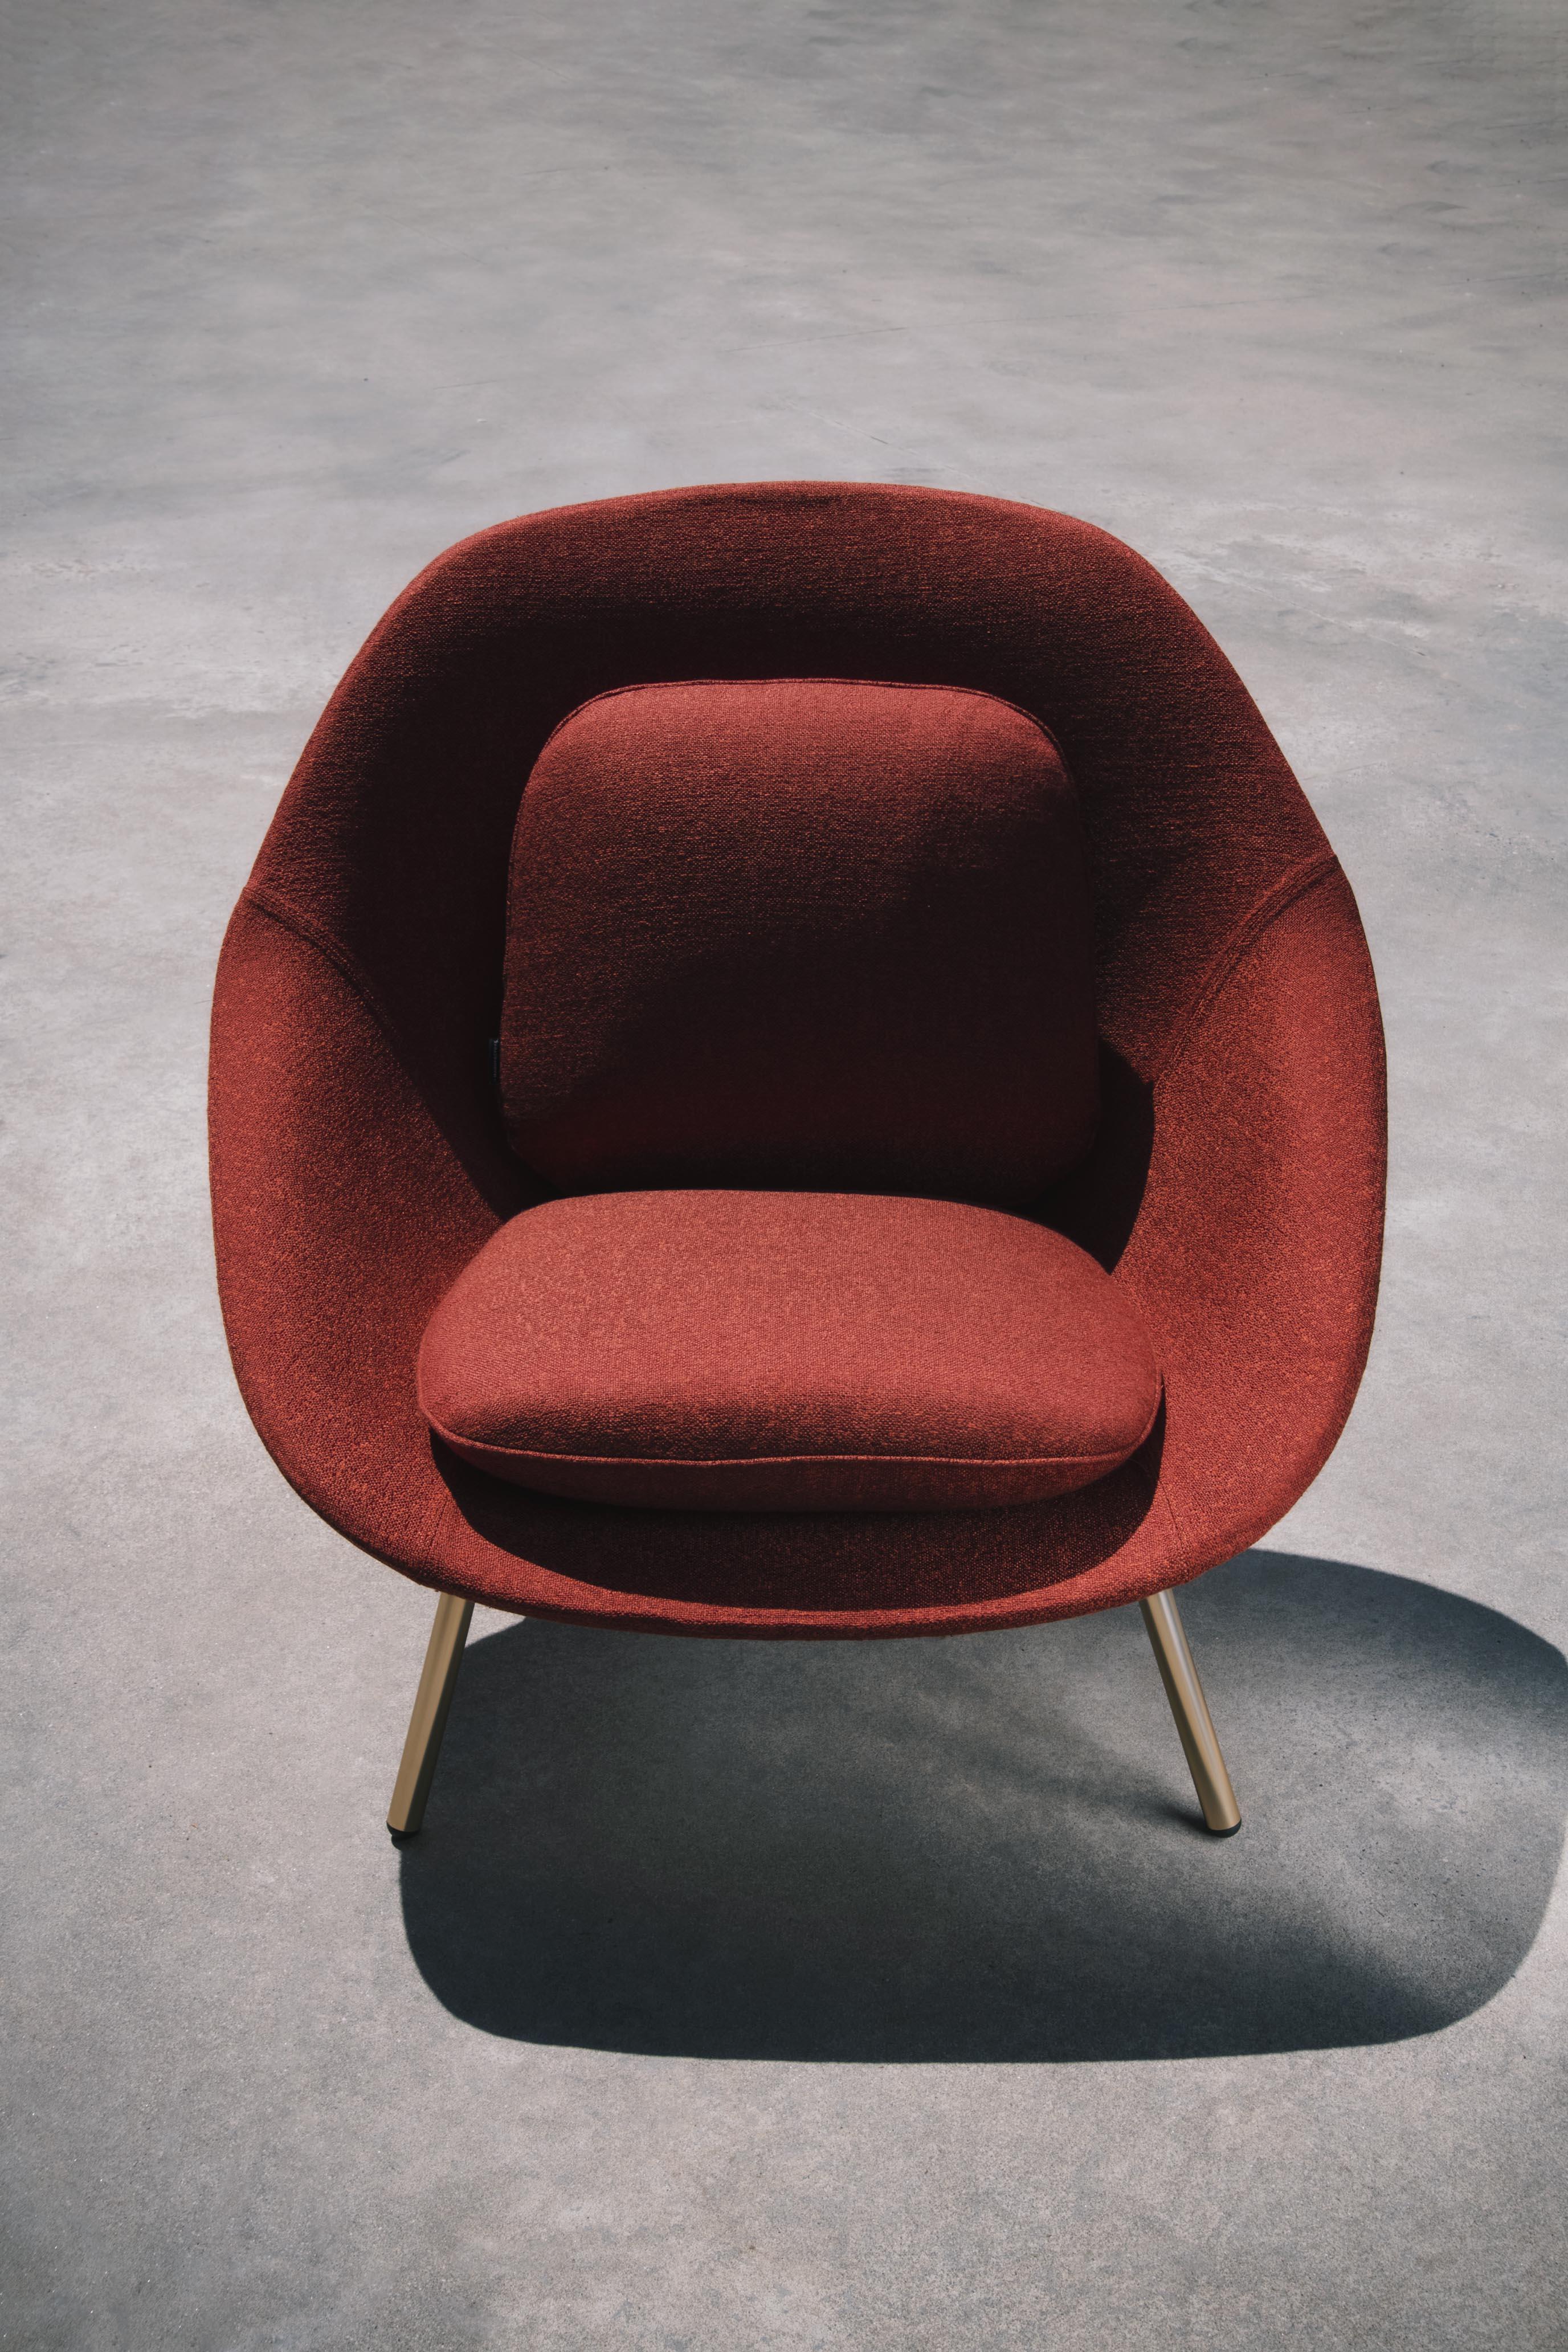 Organic Modern Amphora Lounge Chair by Noé Duchaufour Lawrance